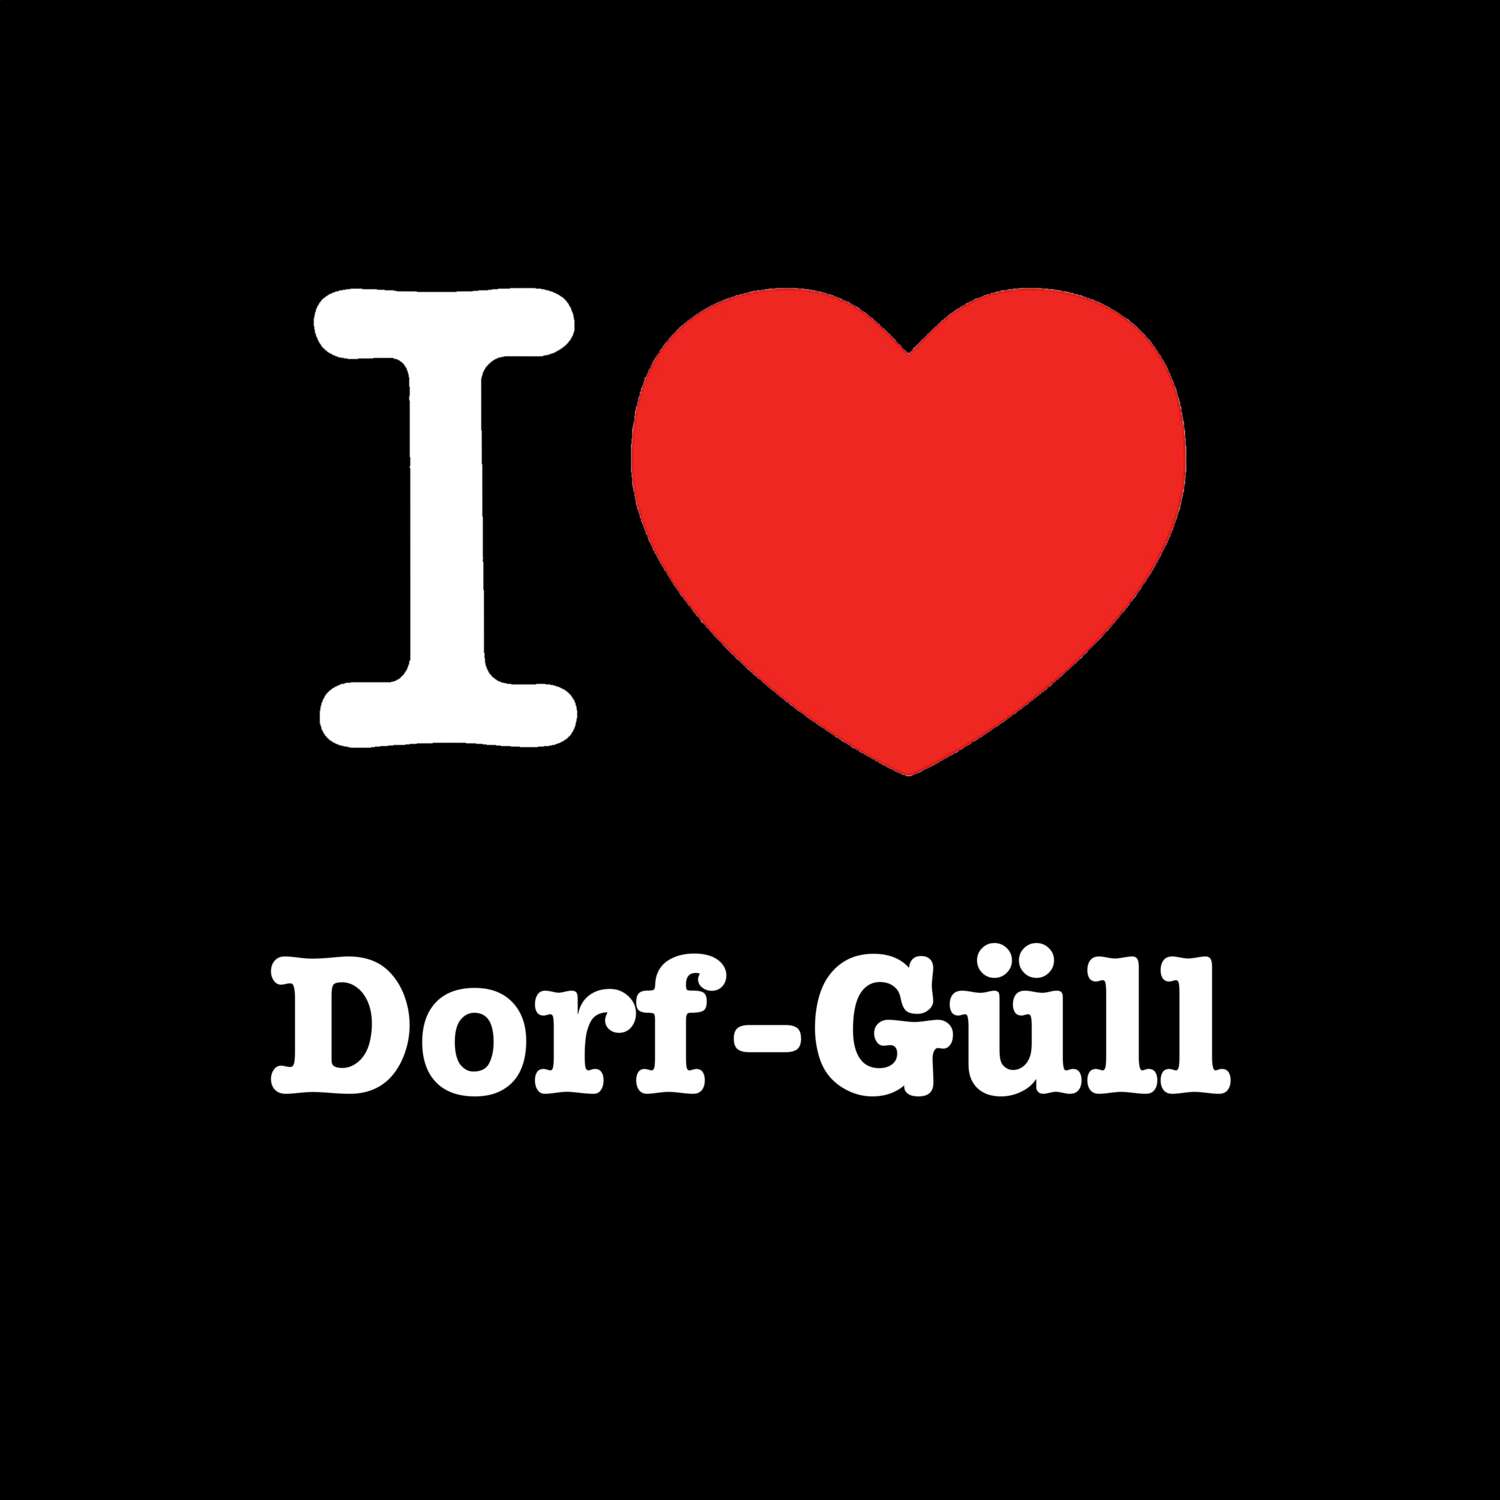 Dorf-Güll T-Shirt »I love«